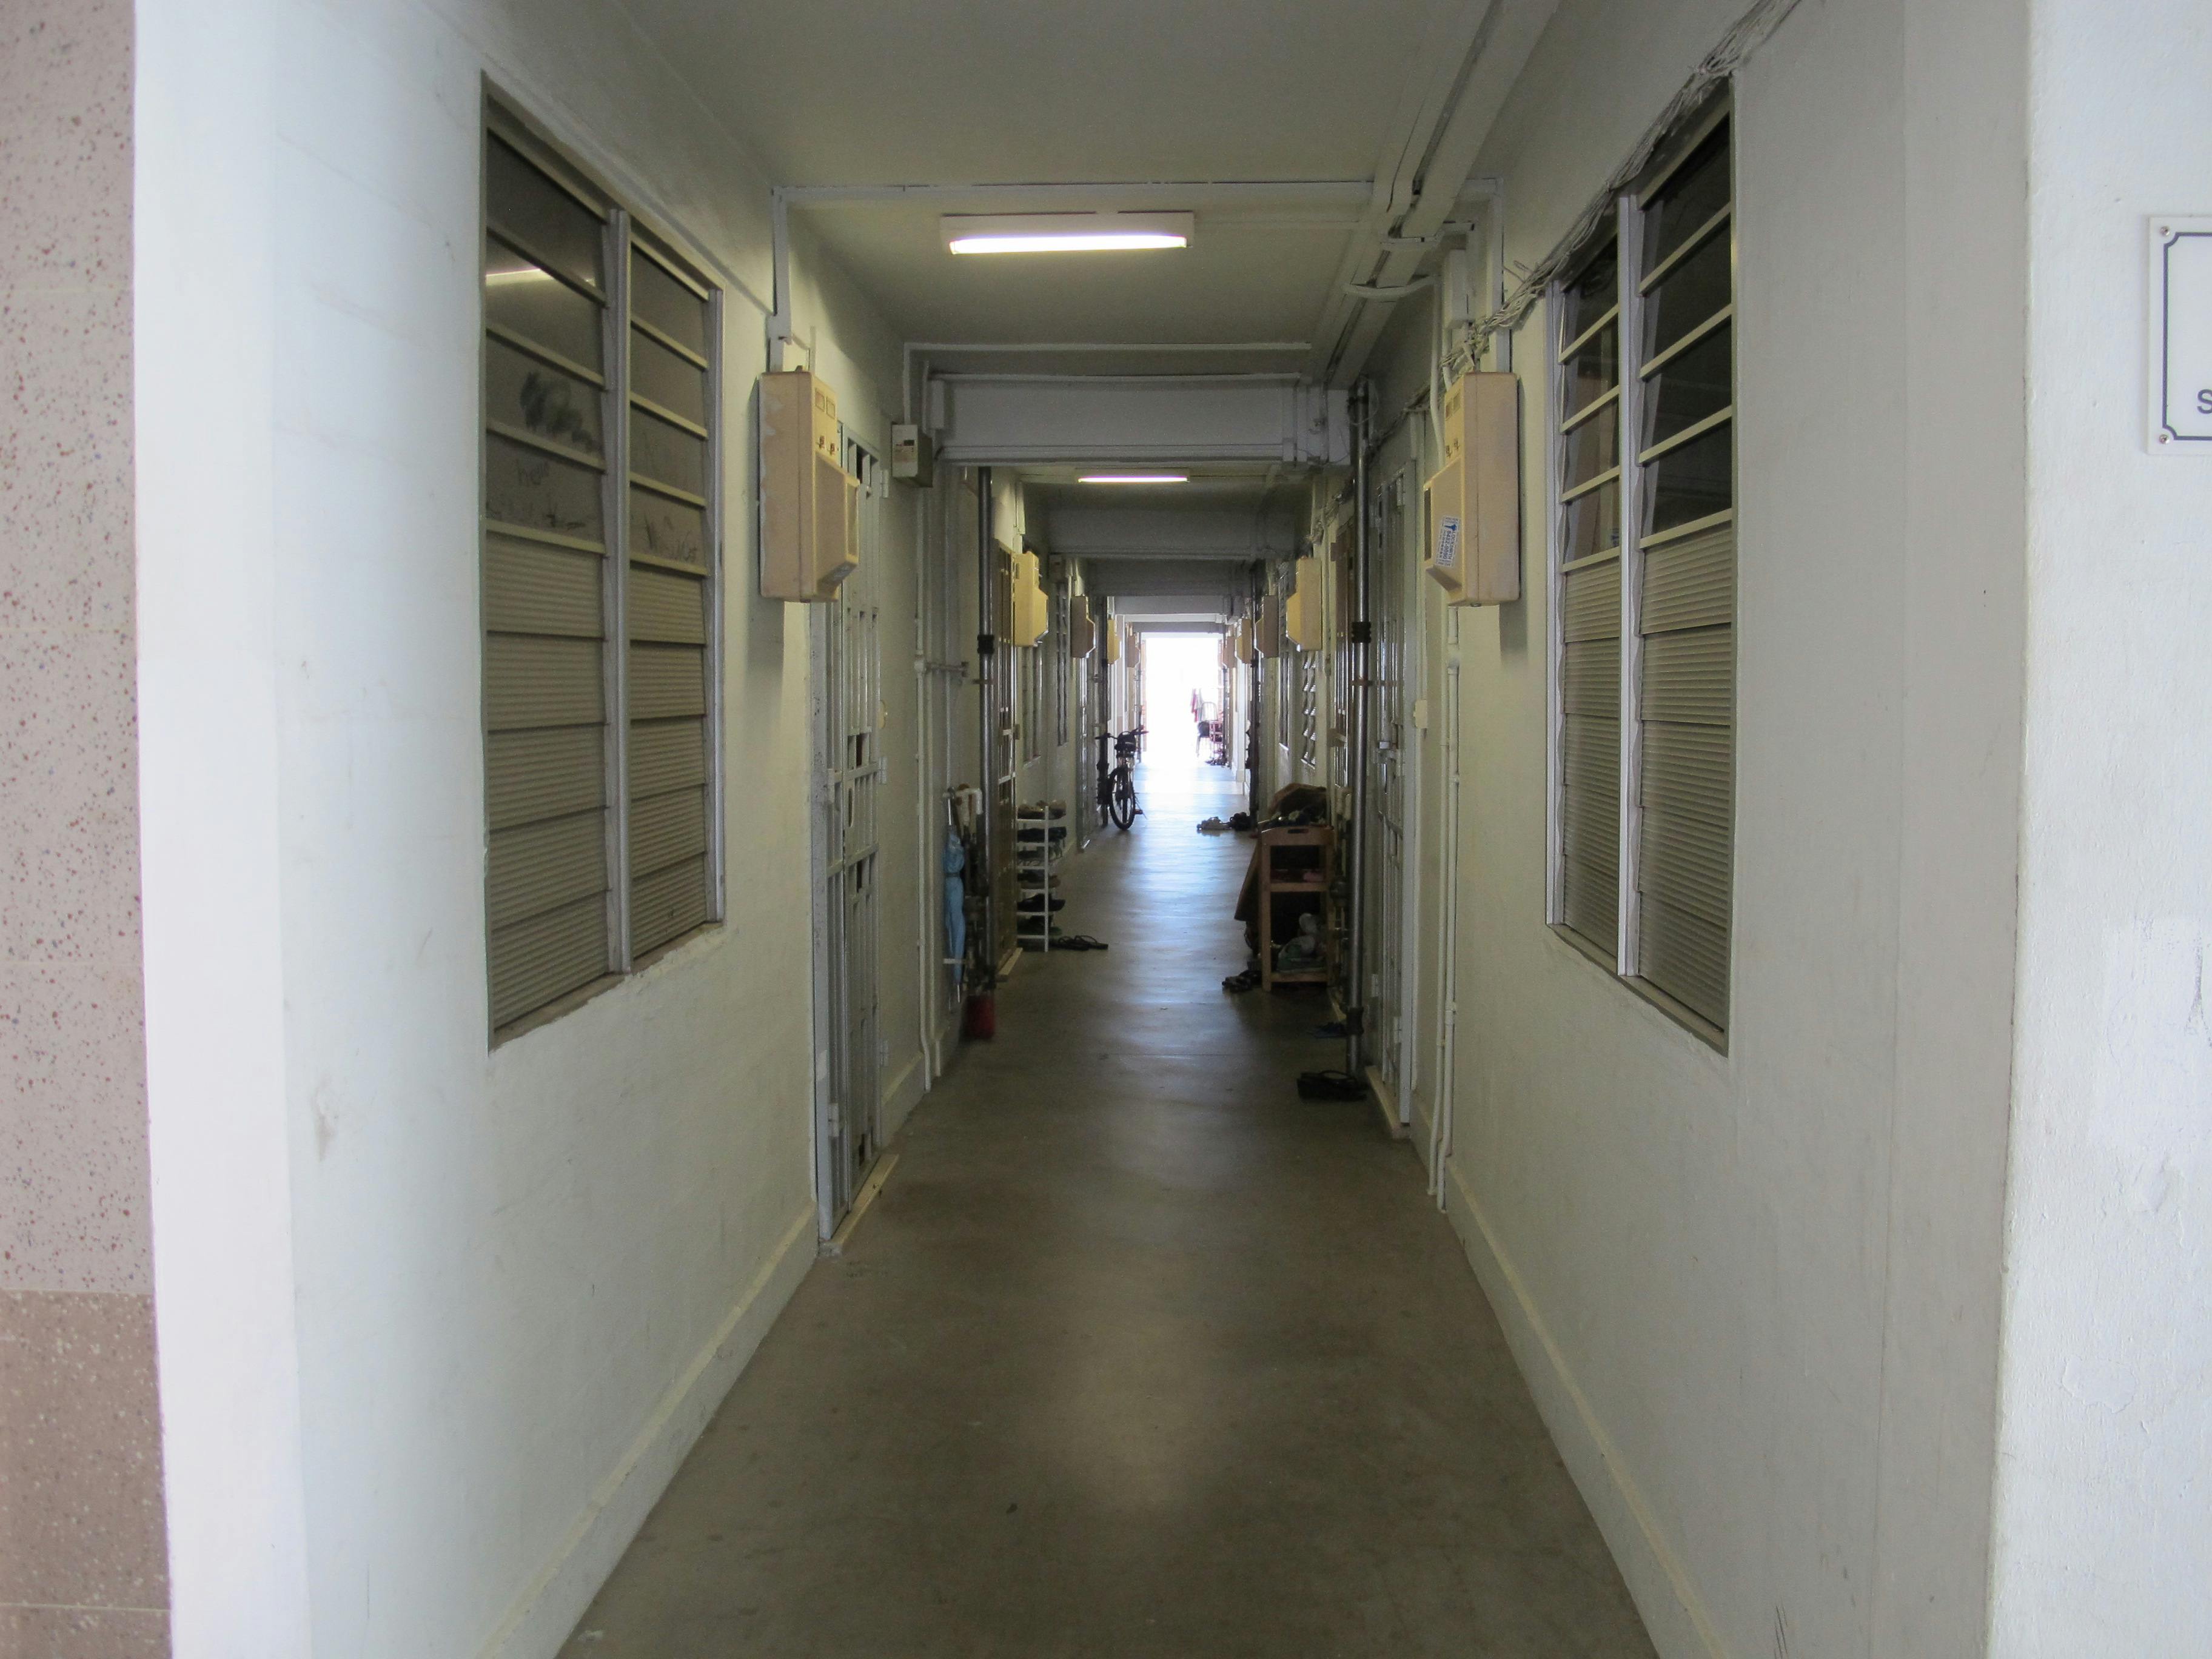 Free stock photo of Common corridor of HDB flat